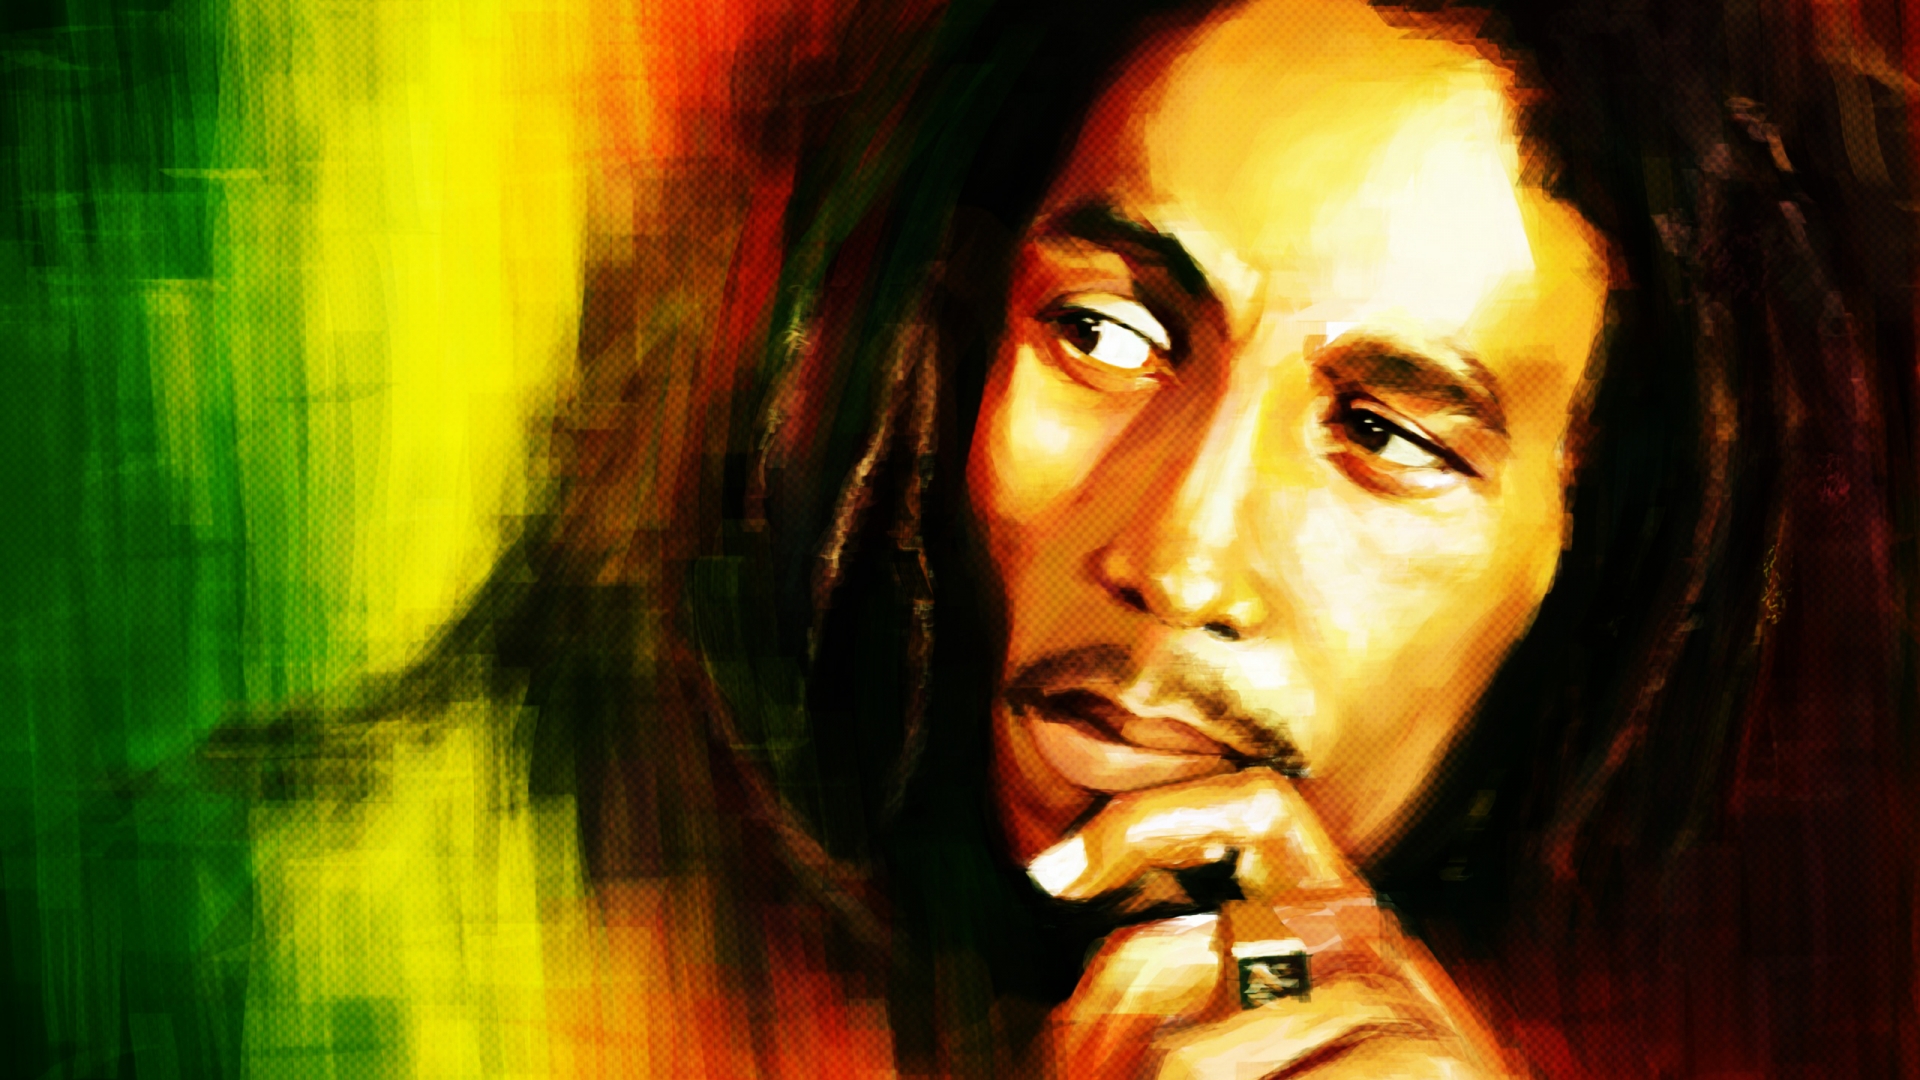 Bob Marley Portrait Painting High Definition Wallpaper